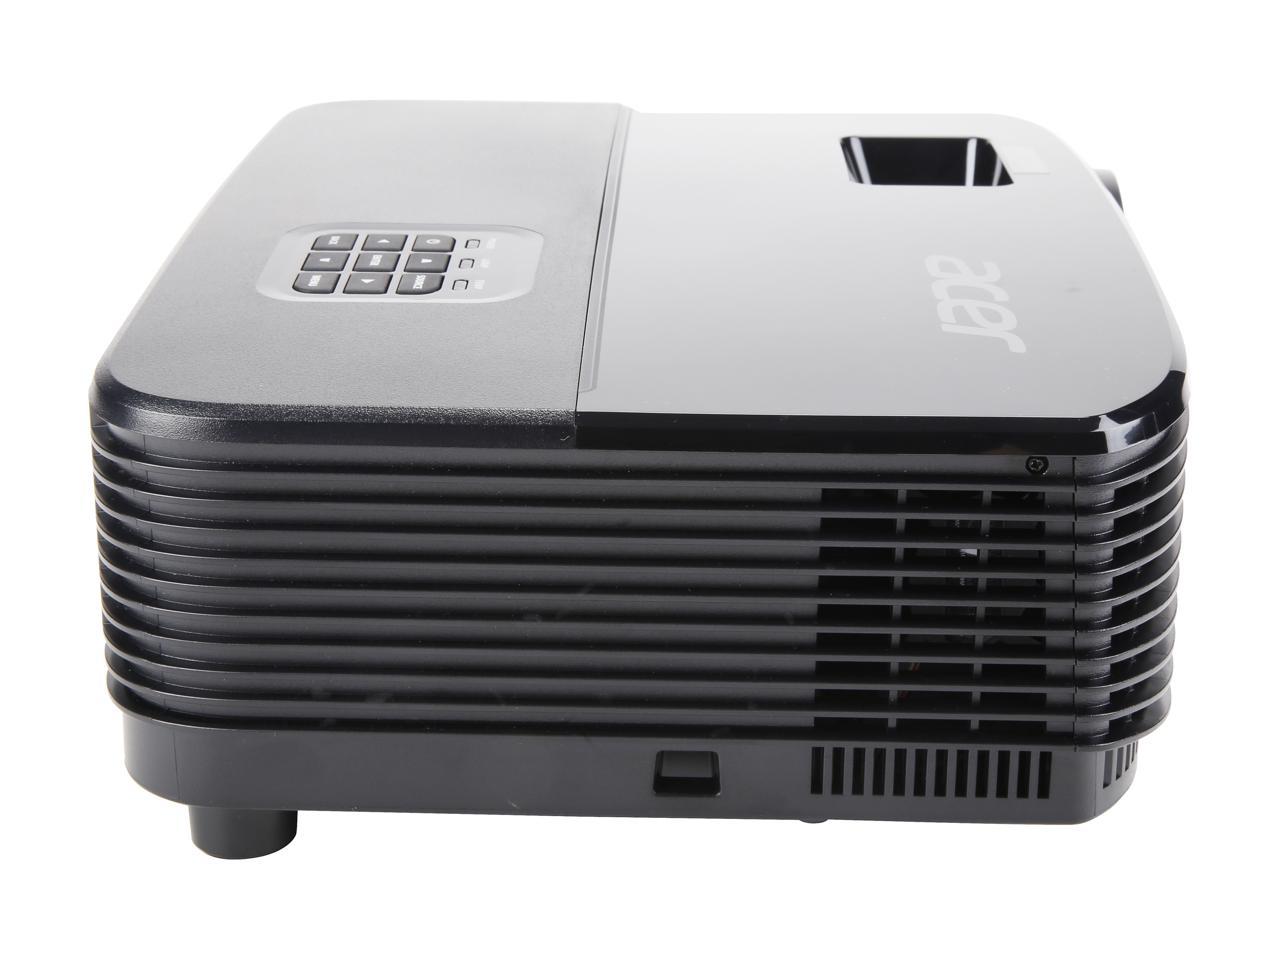 Acer X1223H (MR.JPR11.00B) 1920x1200 DLP Projector 3600 Lumens